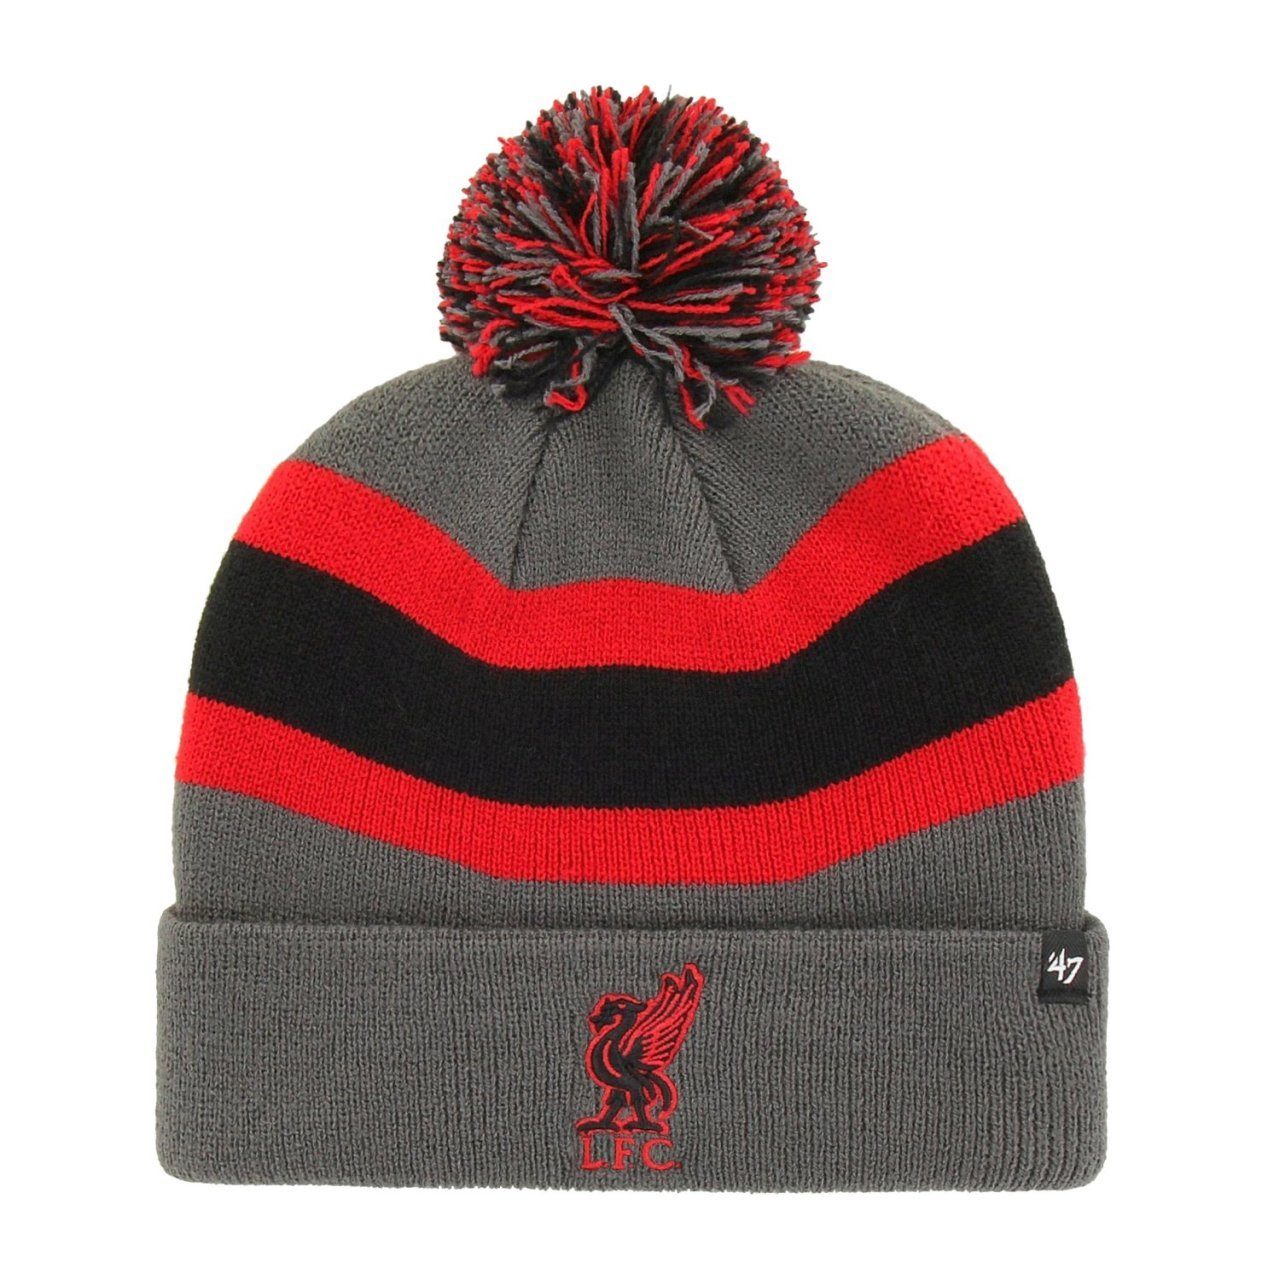 '47 Brand Fleecemütze Knit Beanie Breakaway FC Liverpool